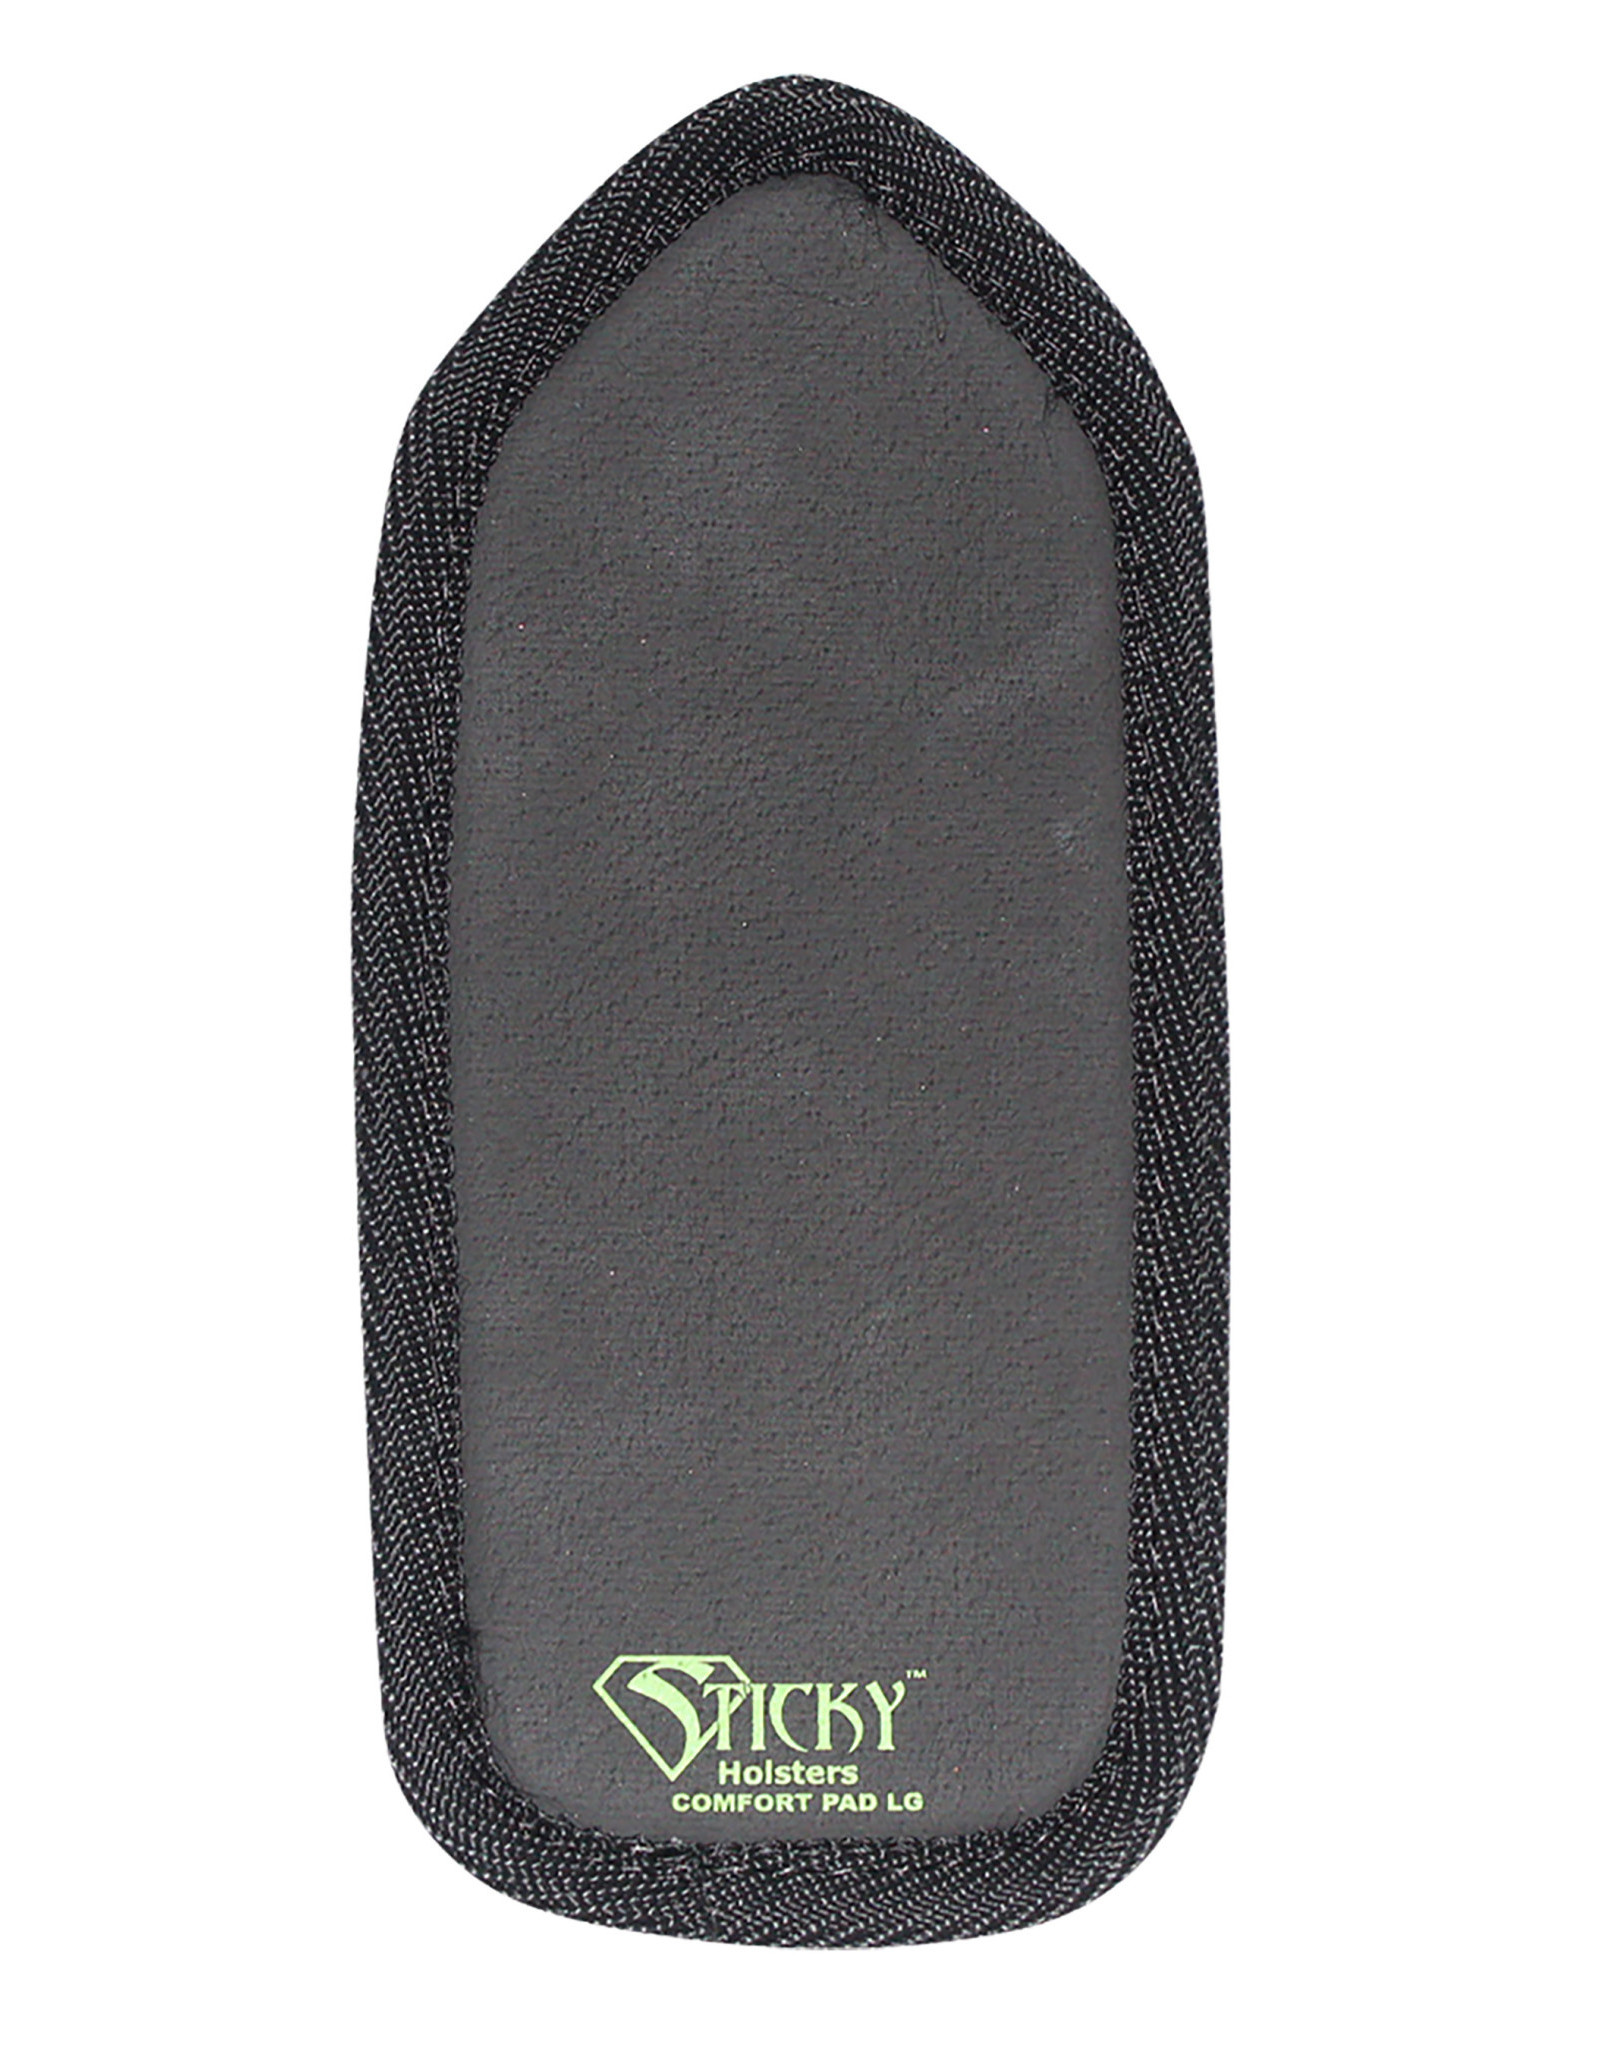 Sticky Holster Comfort Pad - LG - 8"x3.75"